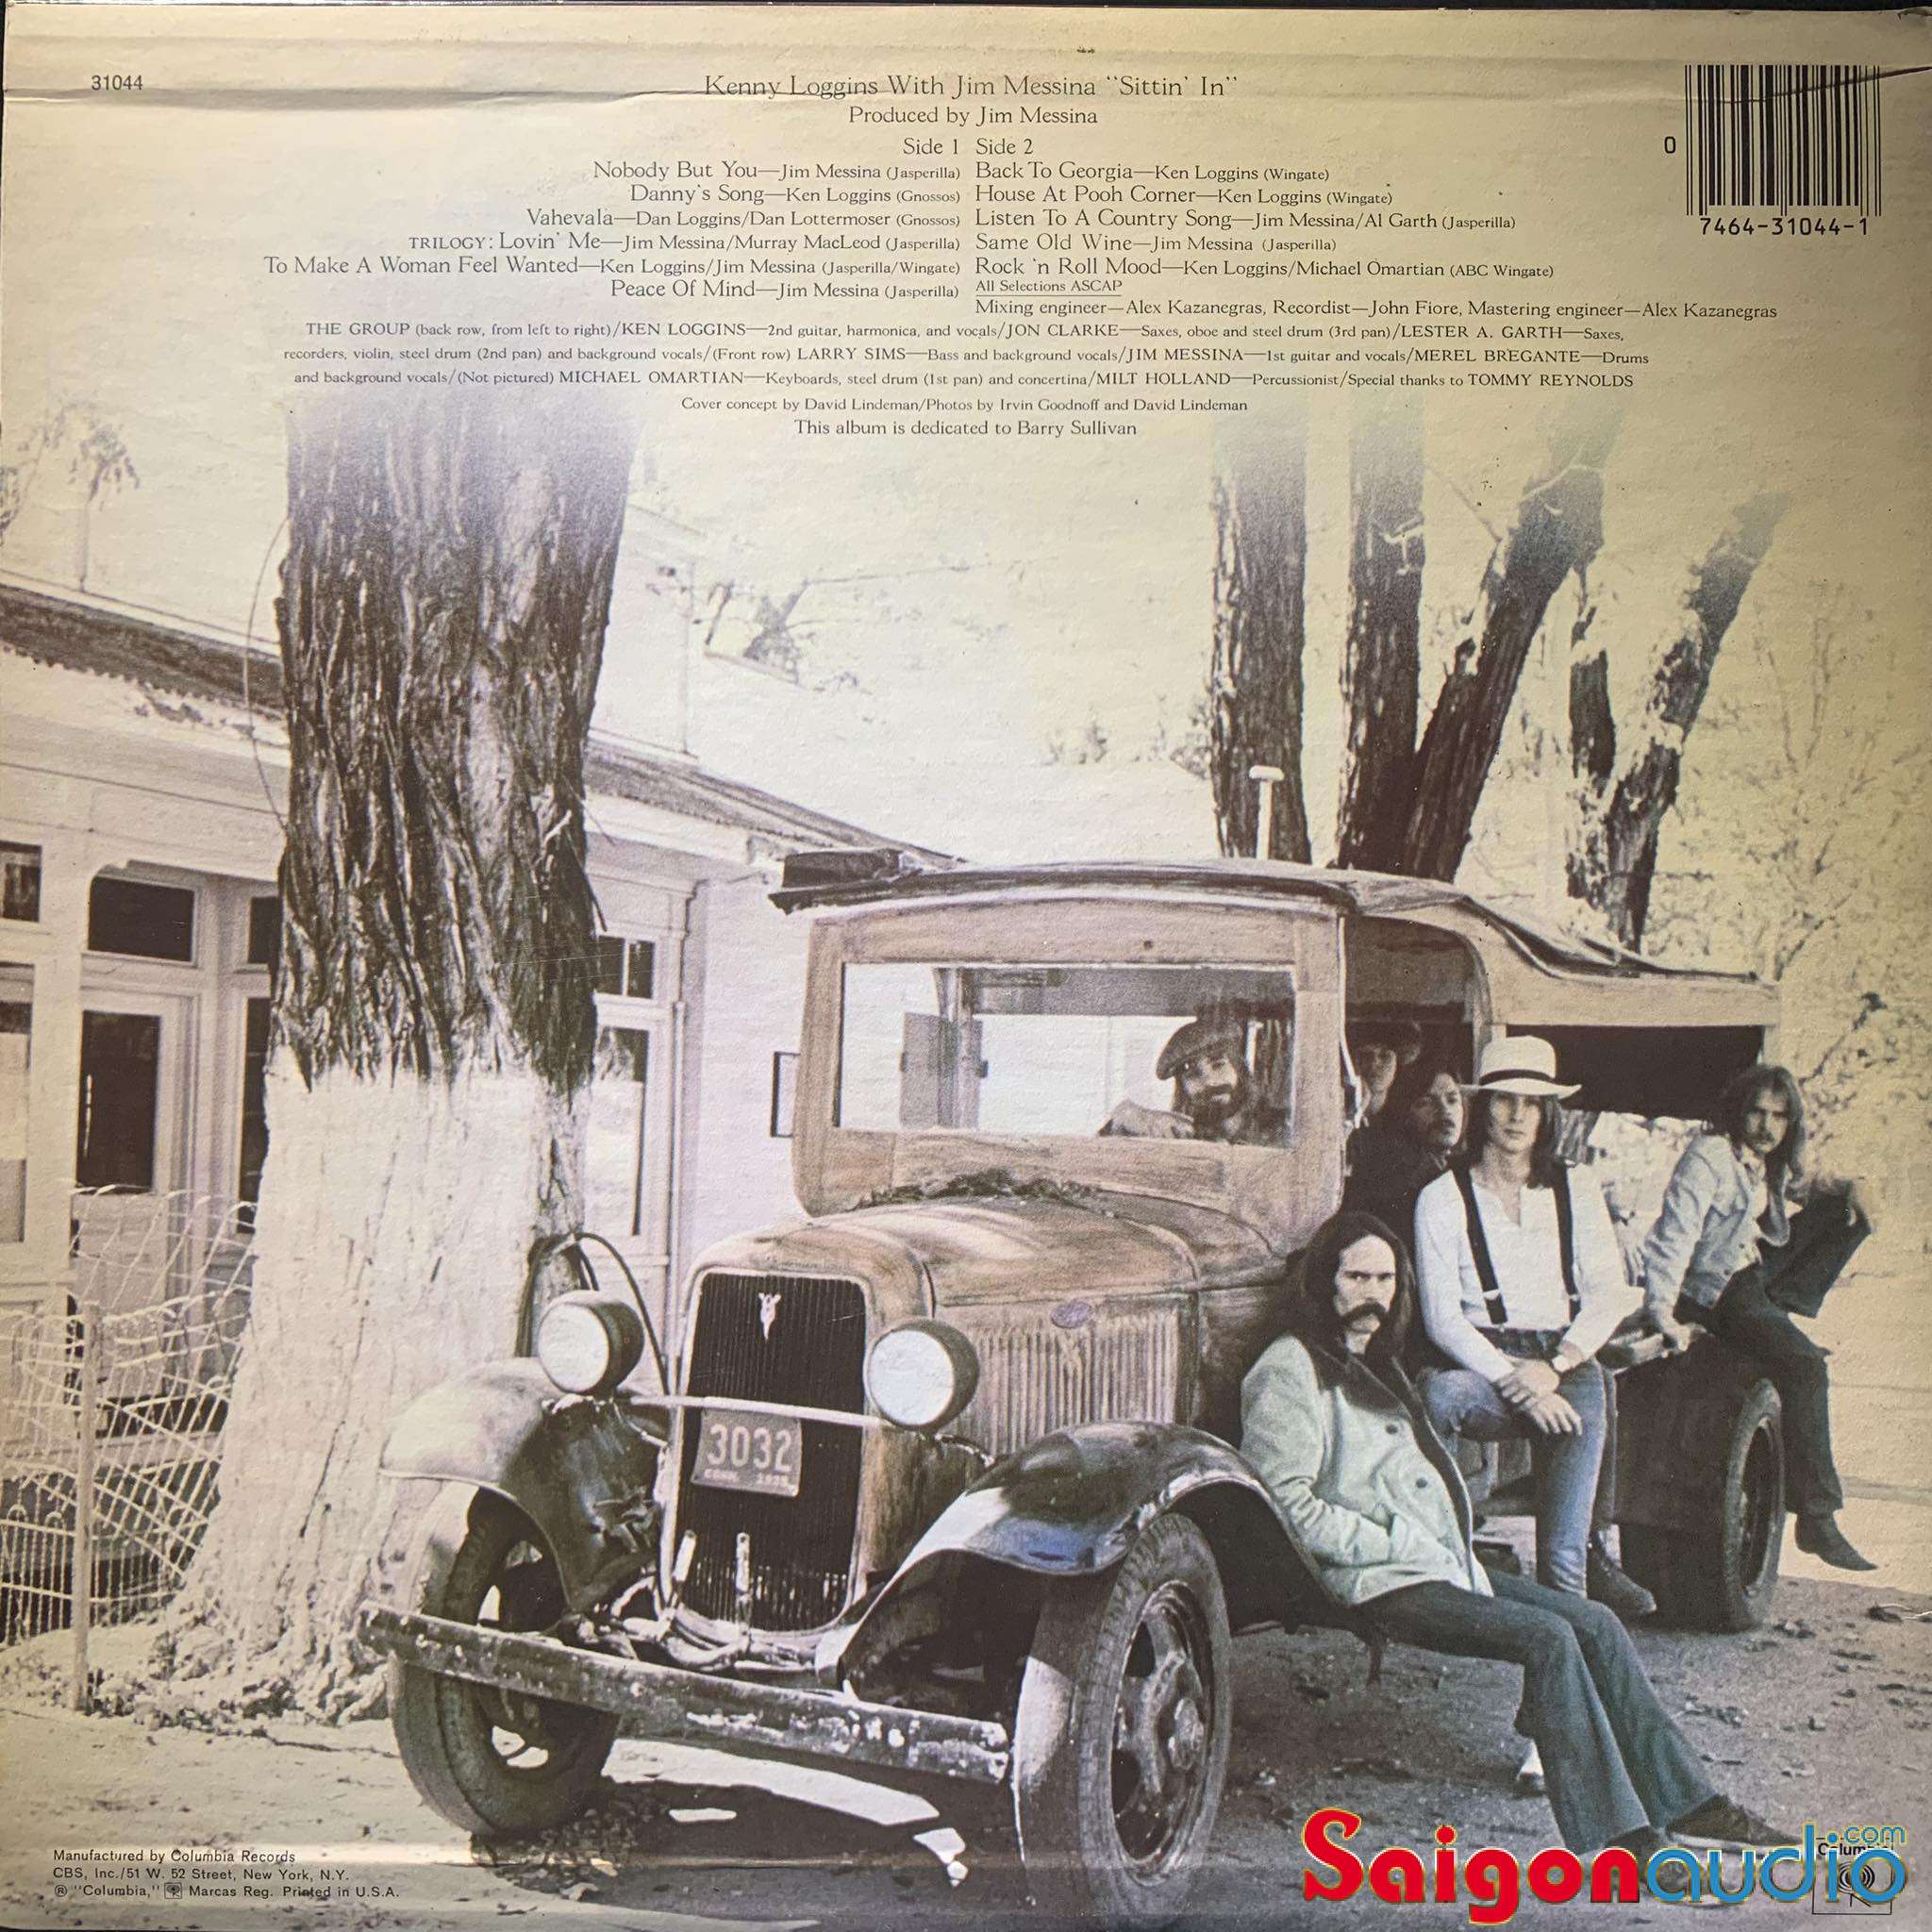 Đĩa than Kenny Loggins With Jim Messina - Sitting In | LP Vinyl Records